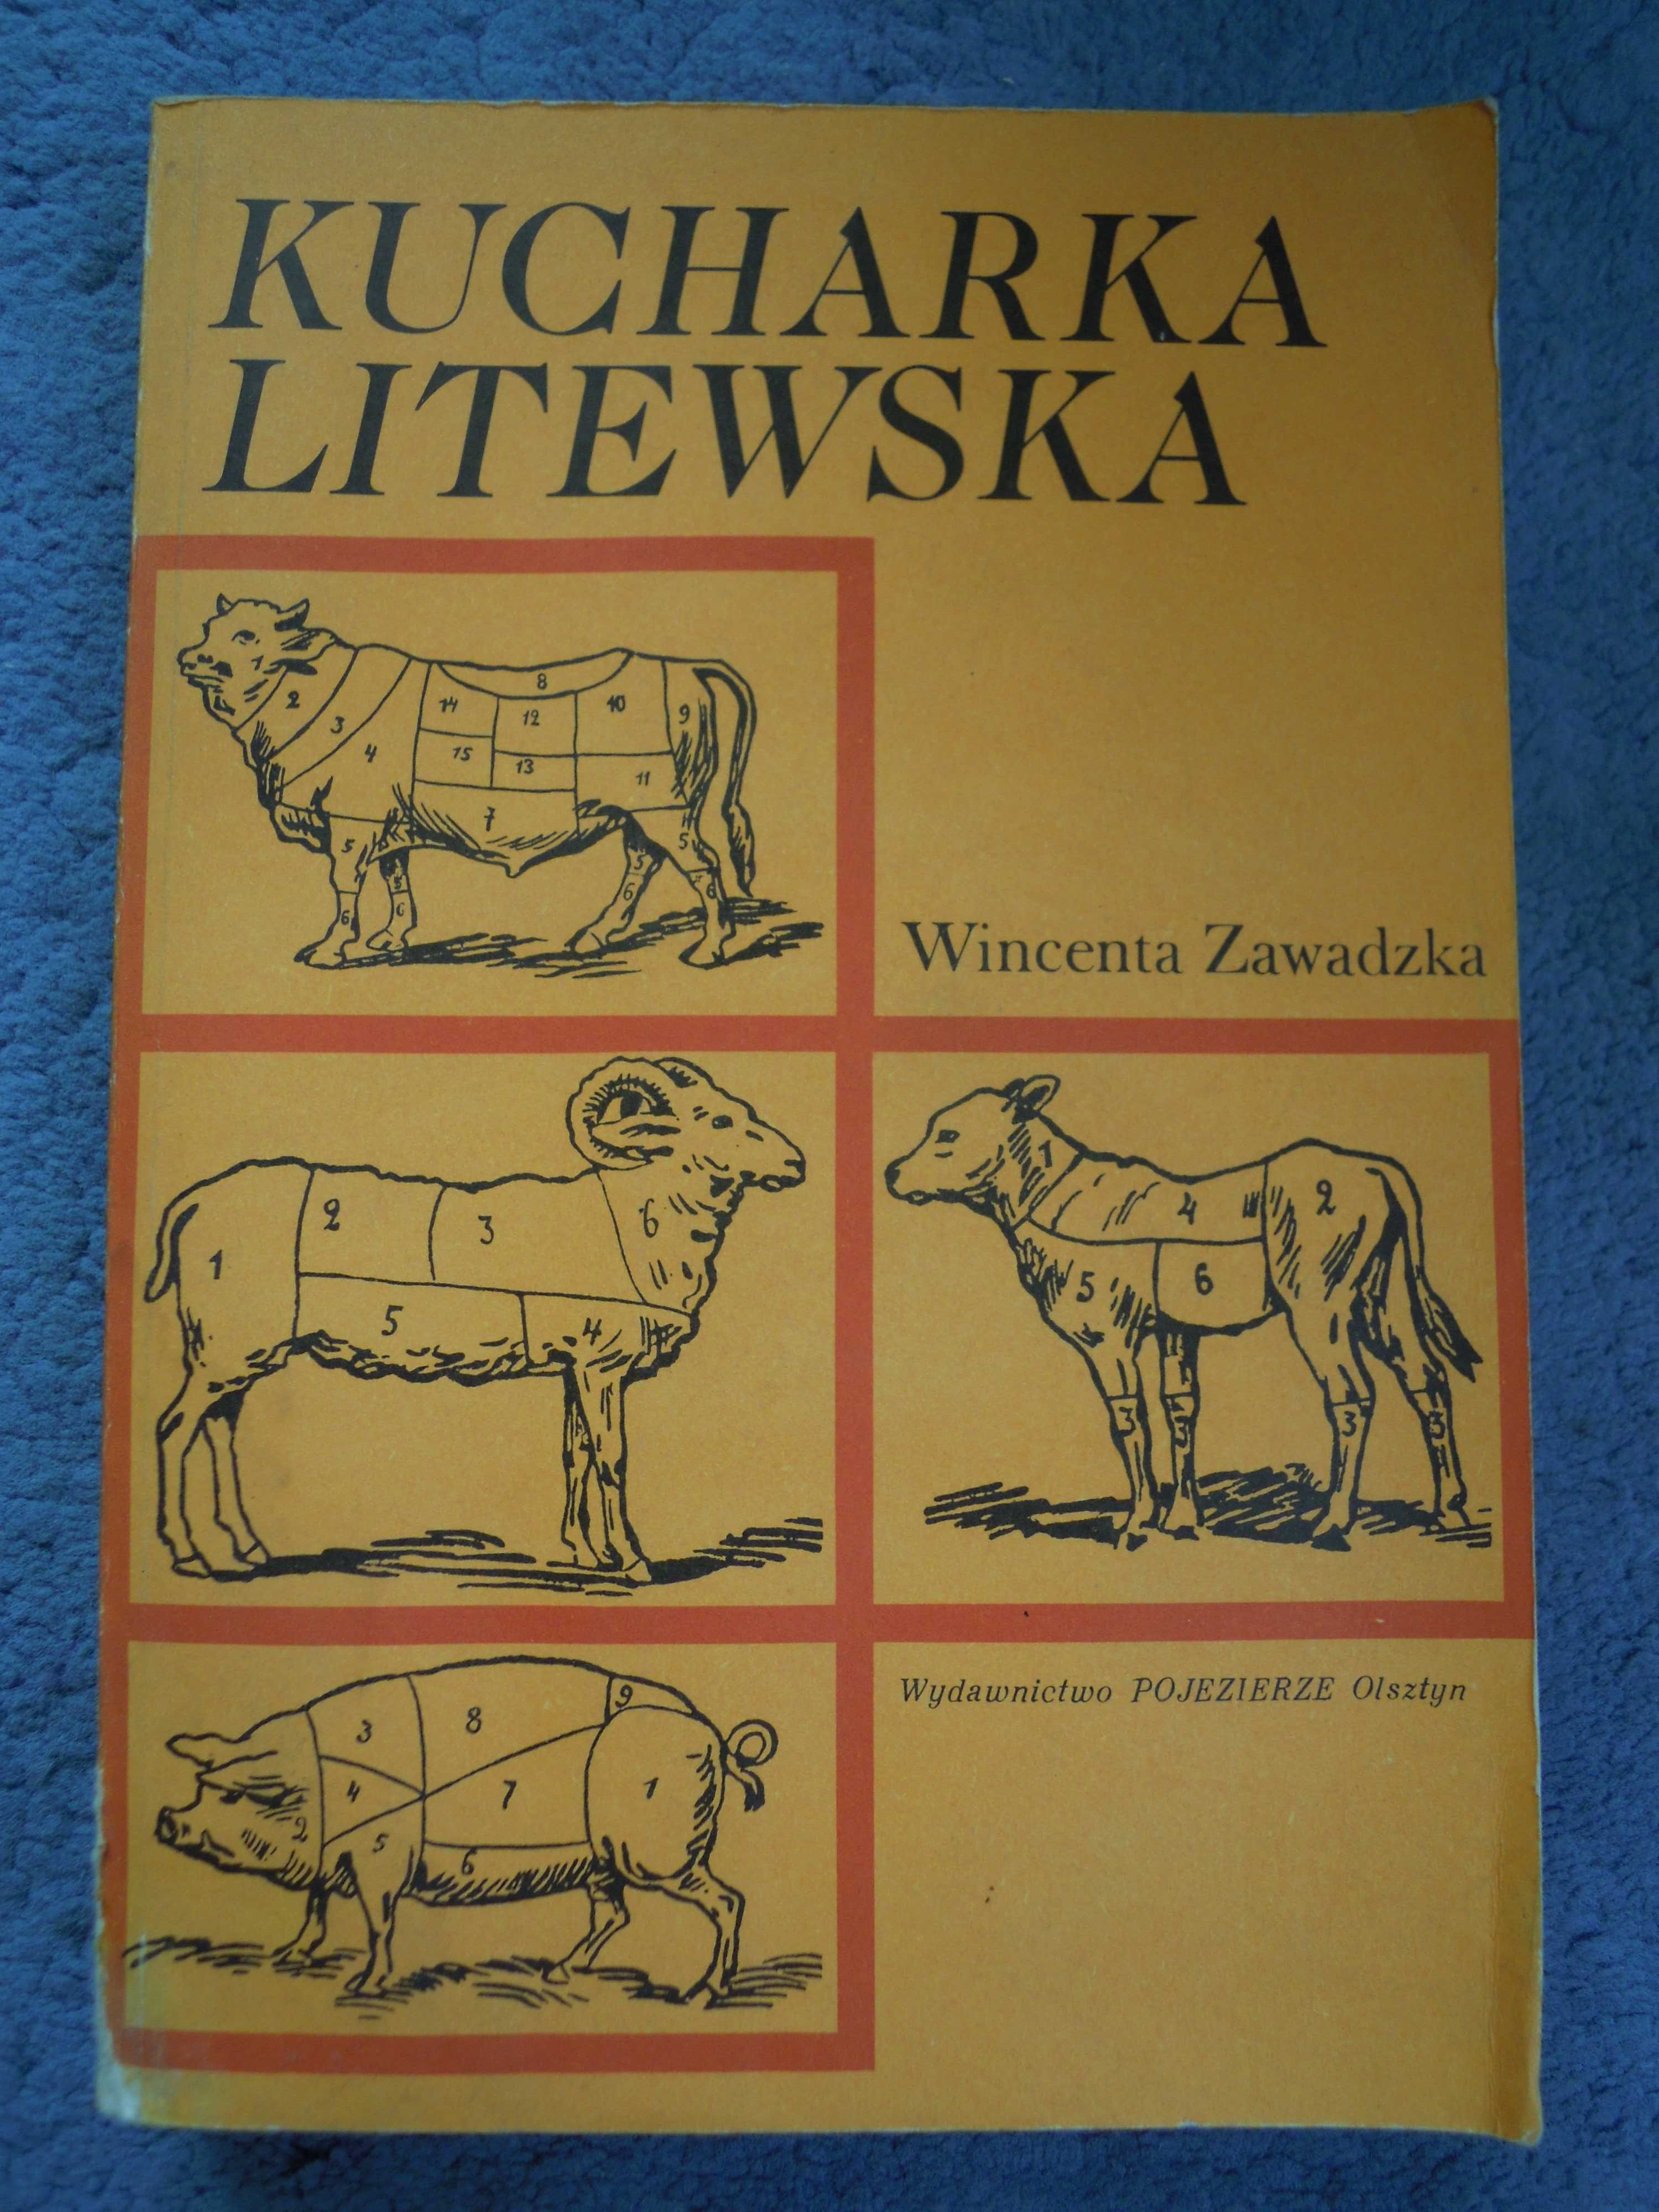 "Kucharka litewska" Wincenta Zawadzka